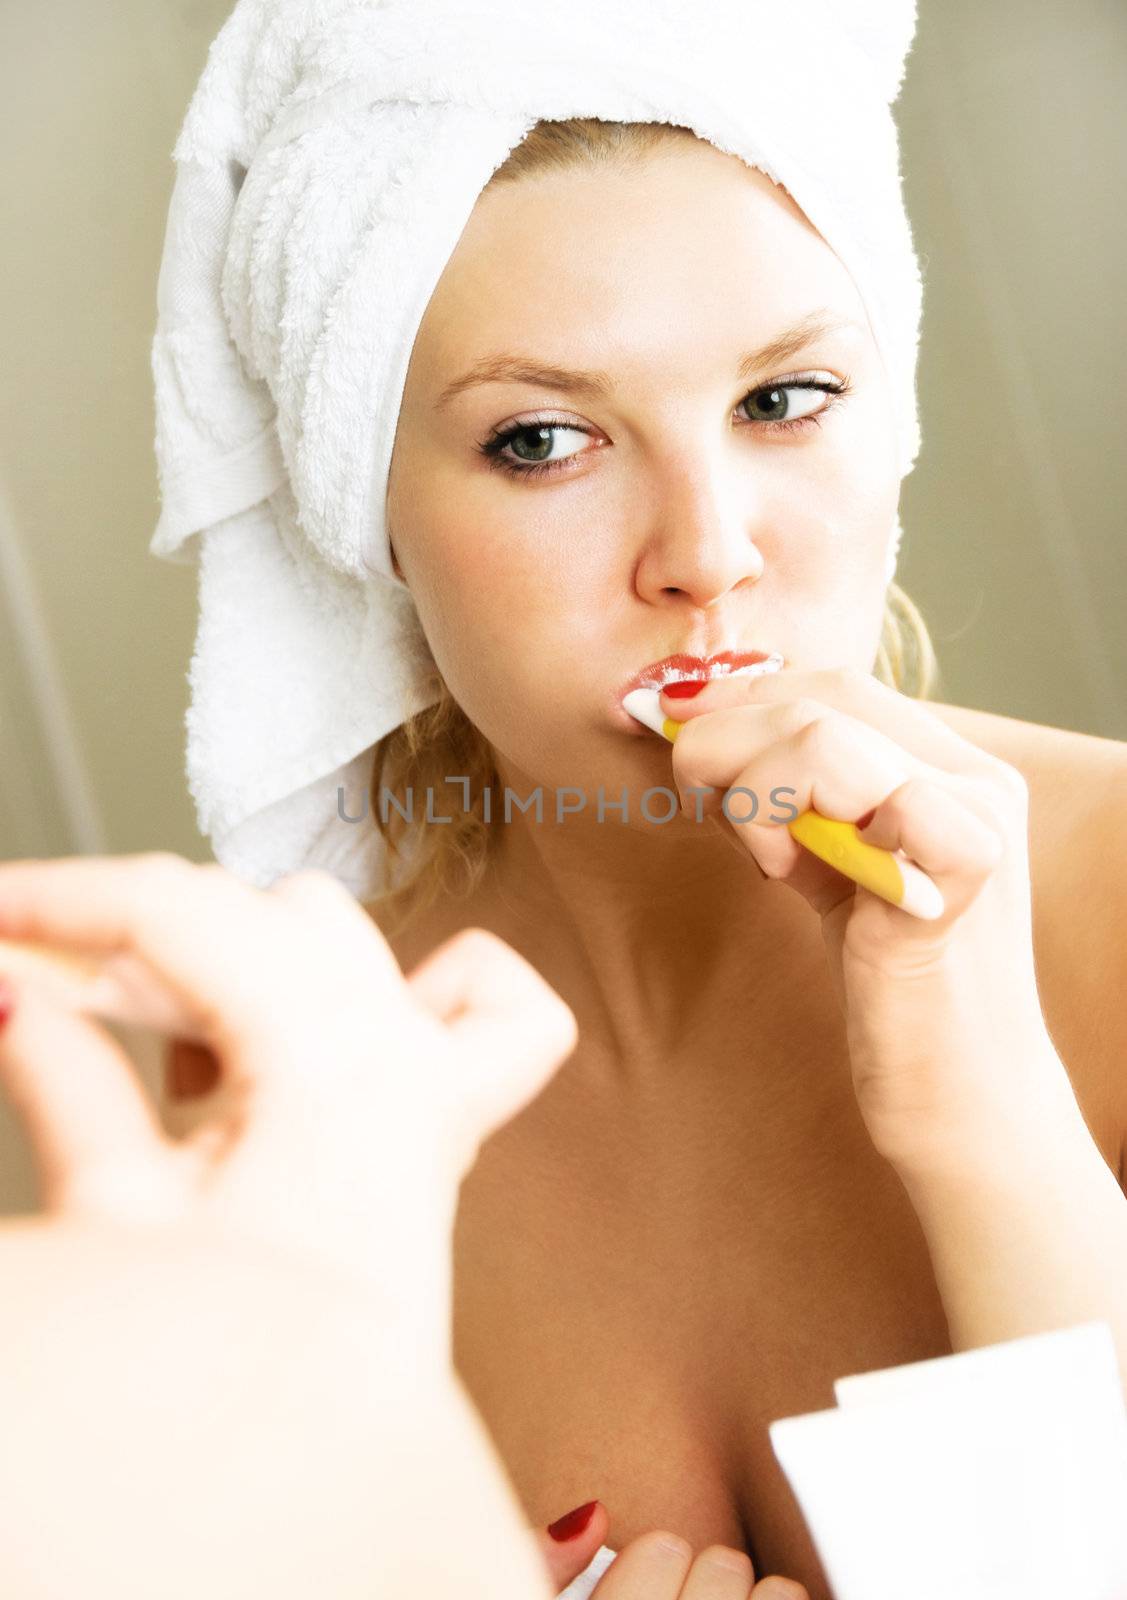 pretty girl brushing teeth by lanak